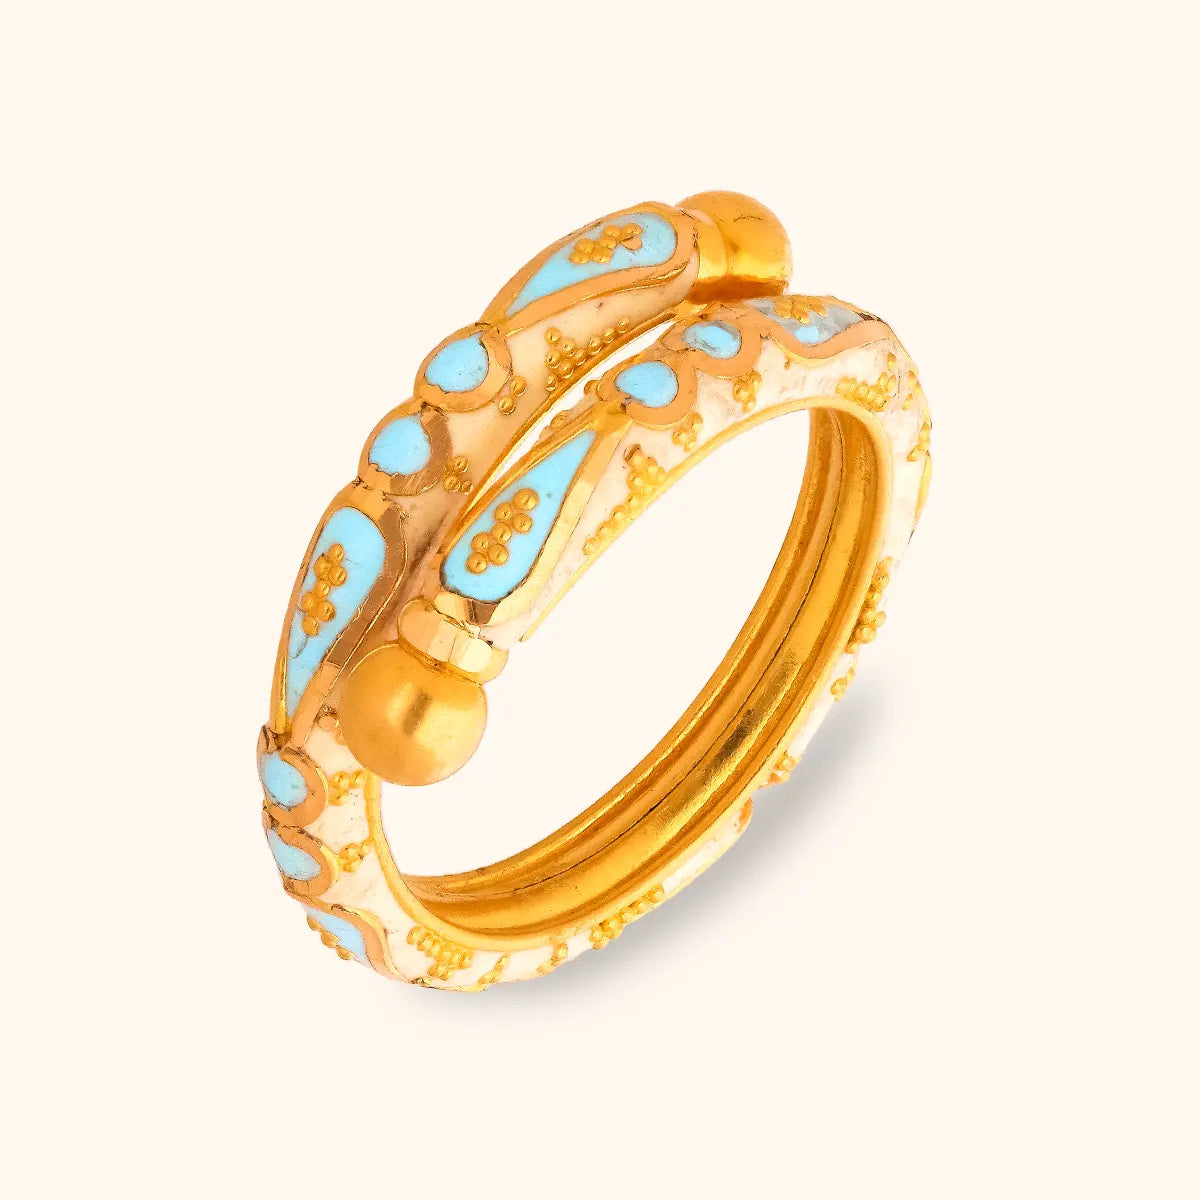 Teal Brilliant Cut Sapphire Ring in Rose Gold - EC Design Jewelry